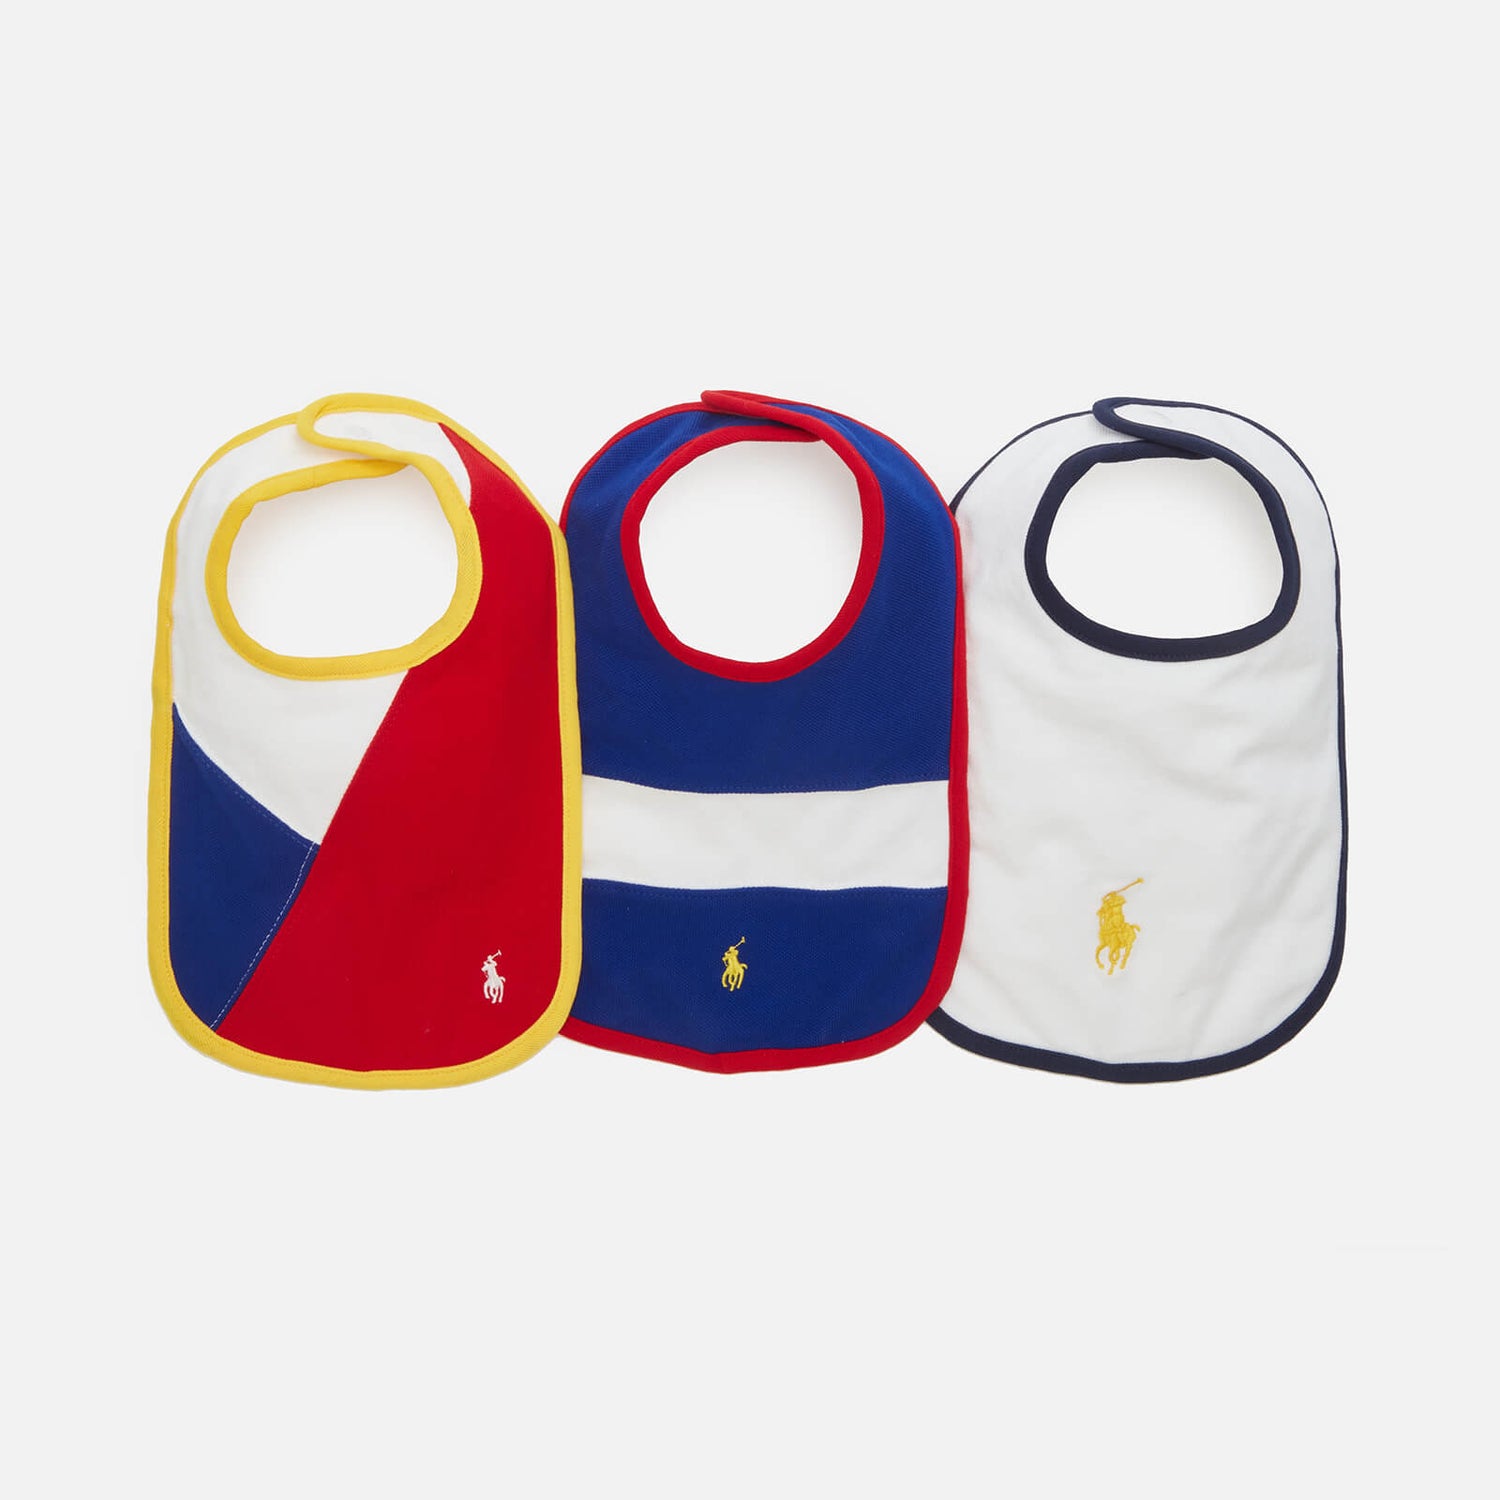 Polo Ralph Lauren Babys' 3Pack Bib Set - Multi - One Size